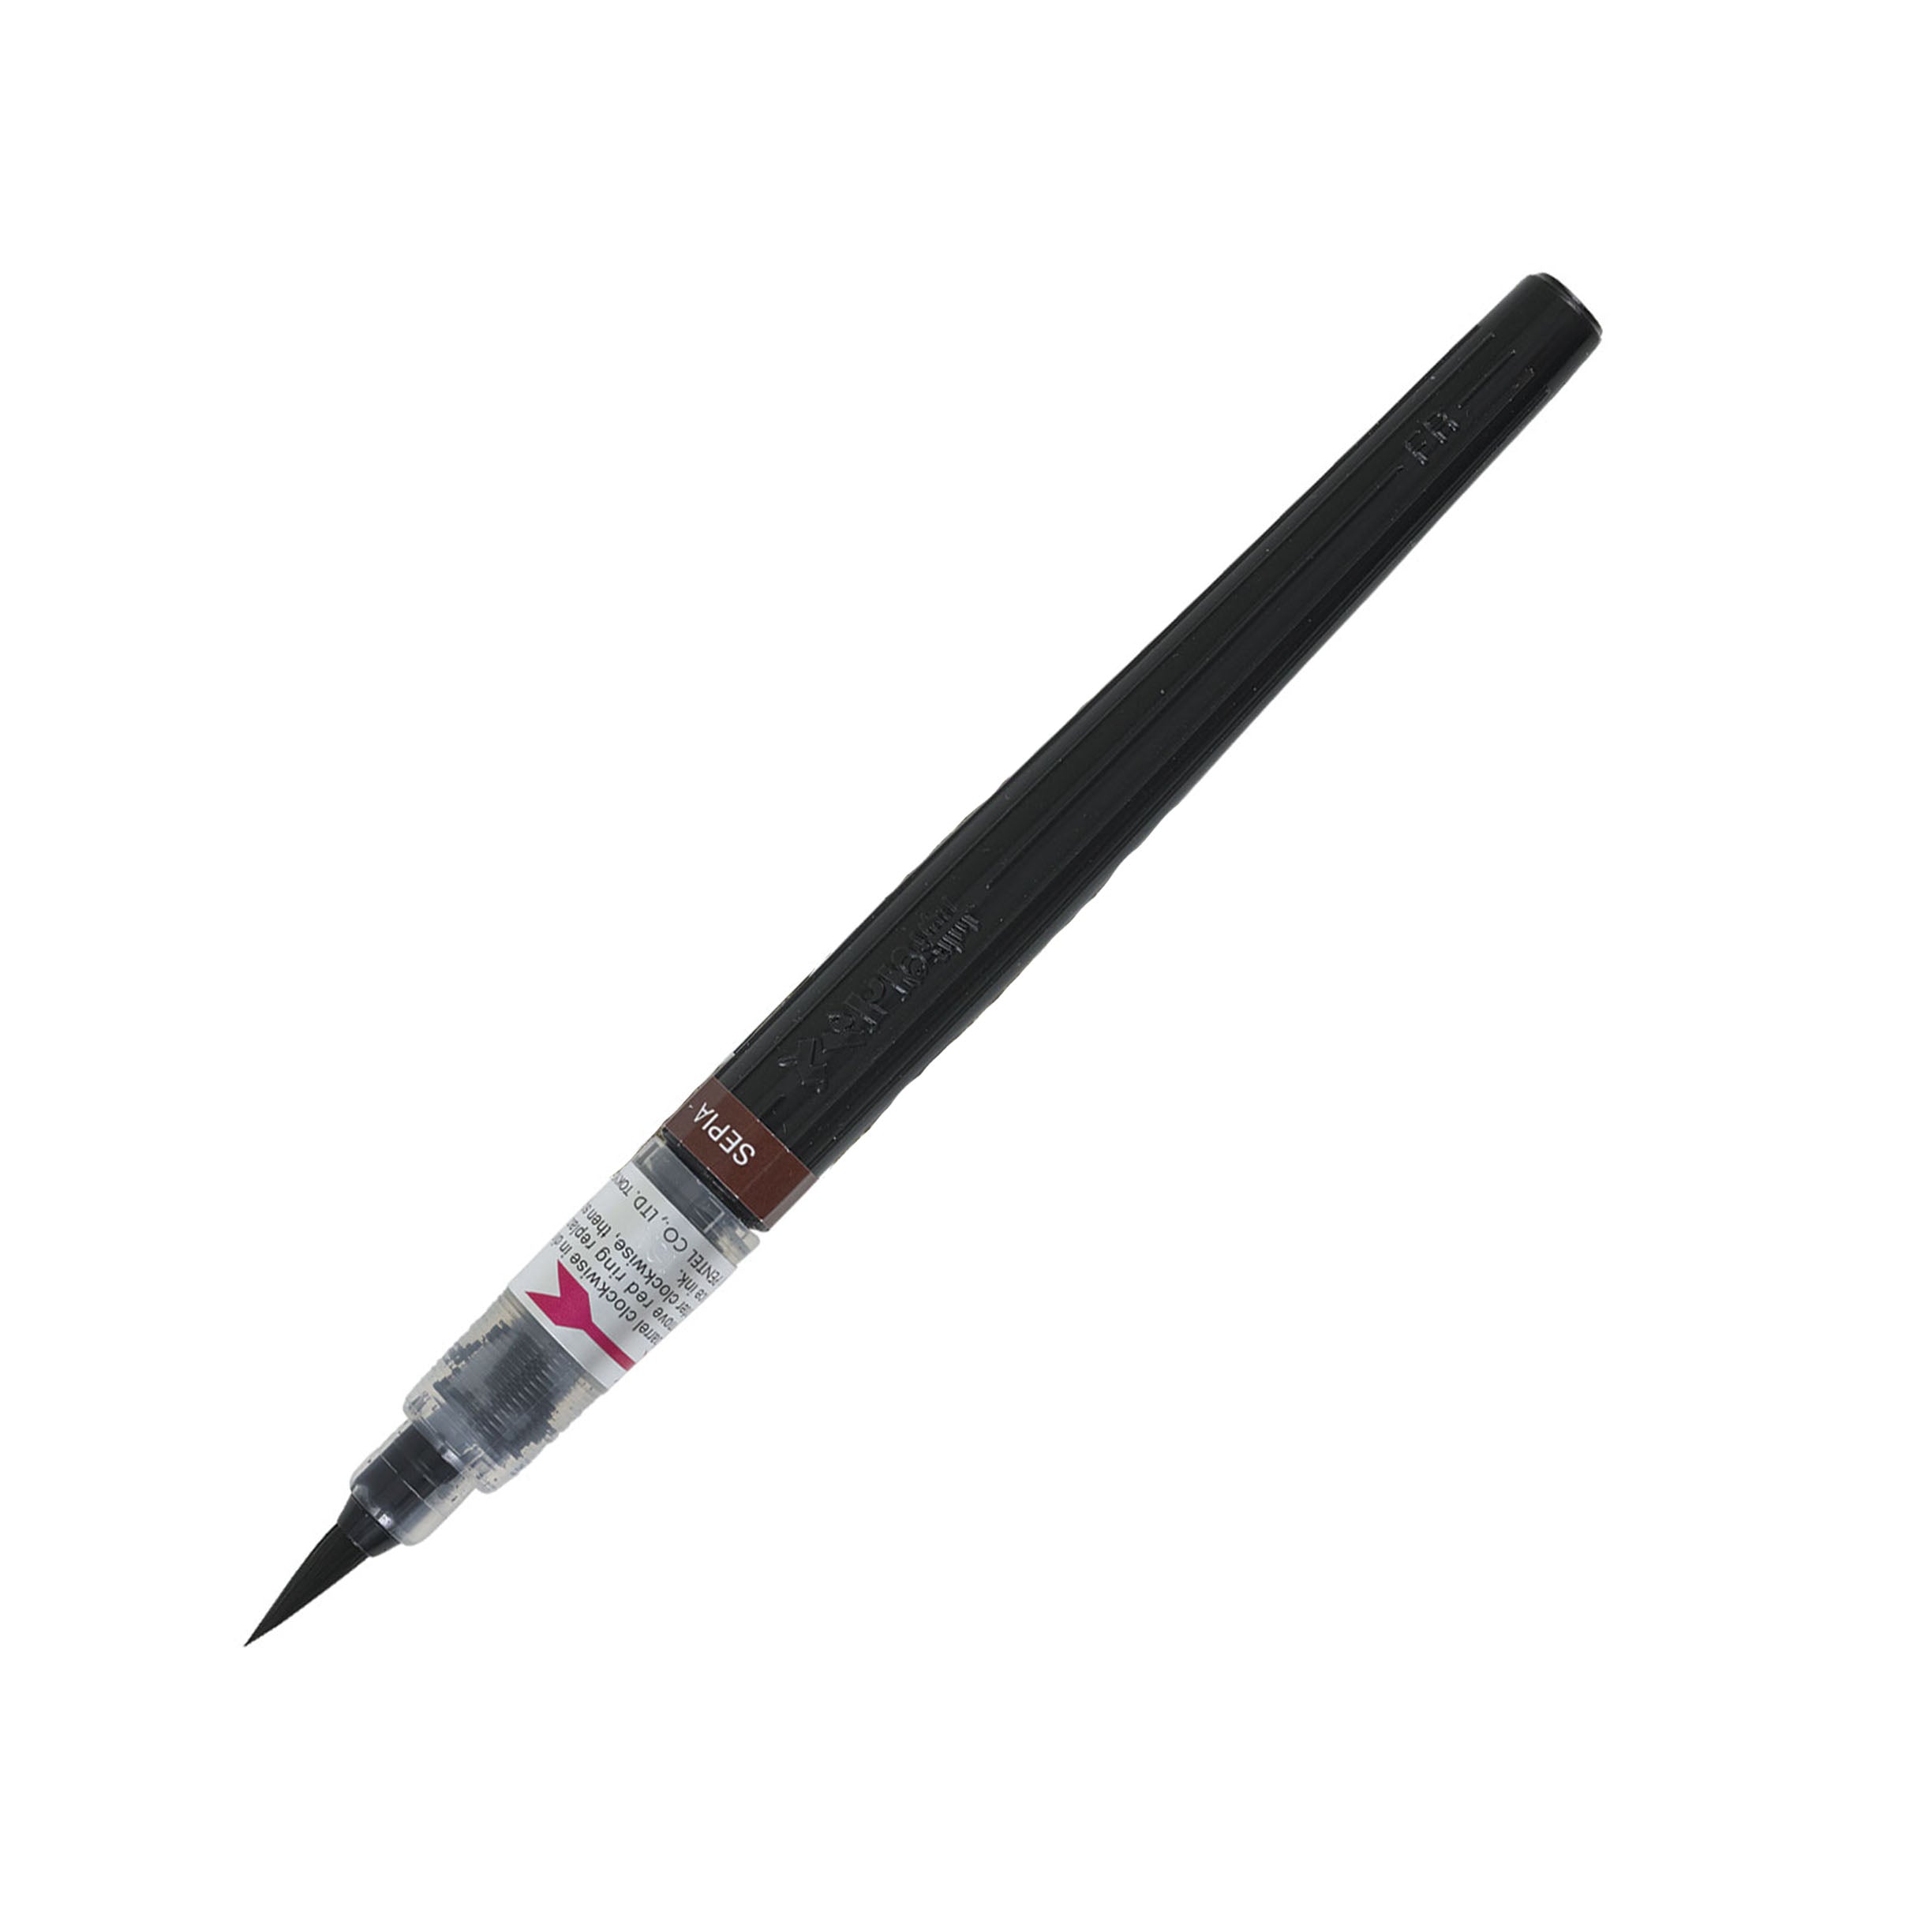 Pentel Arts Color Brush Pen